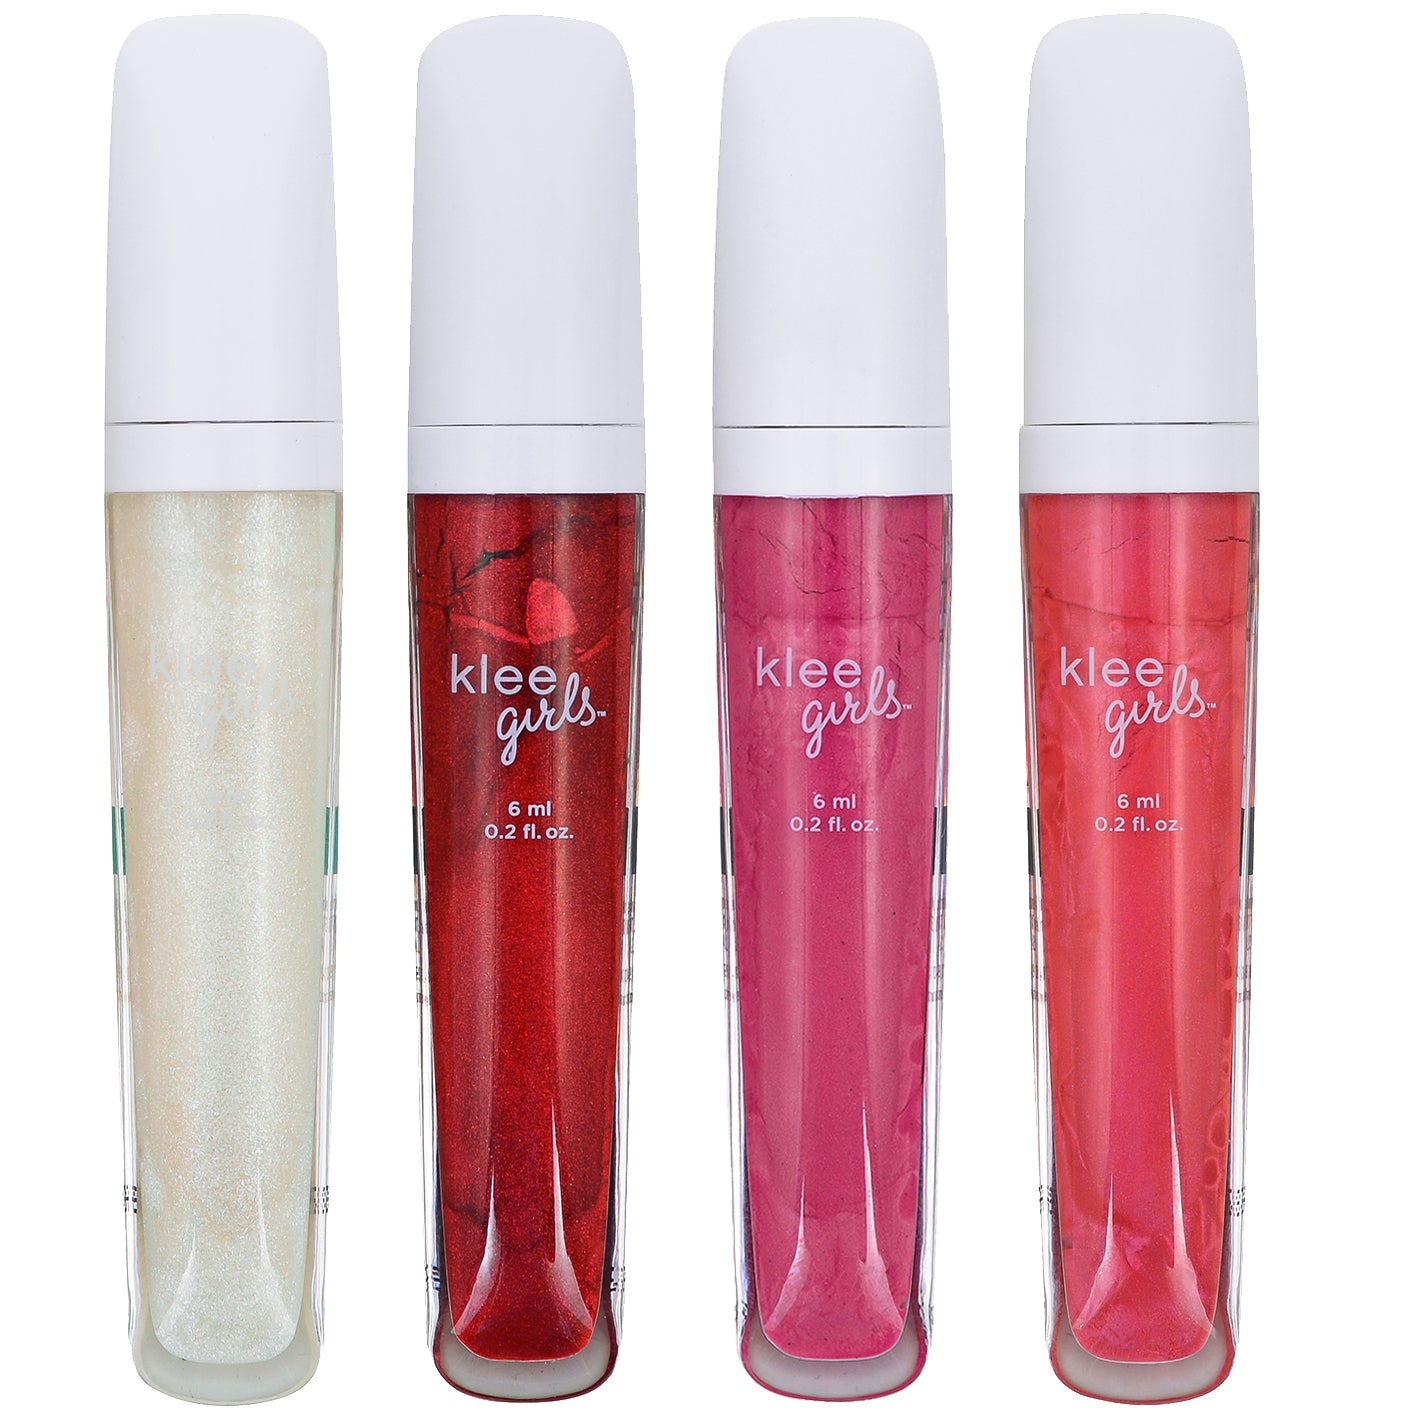 Evereden Kids Tinted Non Toxic Lip Gloss: Sheer Red & Pink - Non Toxic Kids Makeup - Vegan Natural Makeup for Kids - Soothing & Hydrating Kid Lip